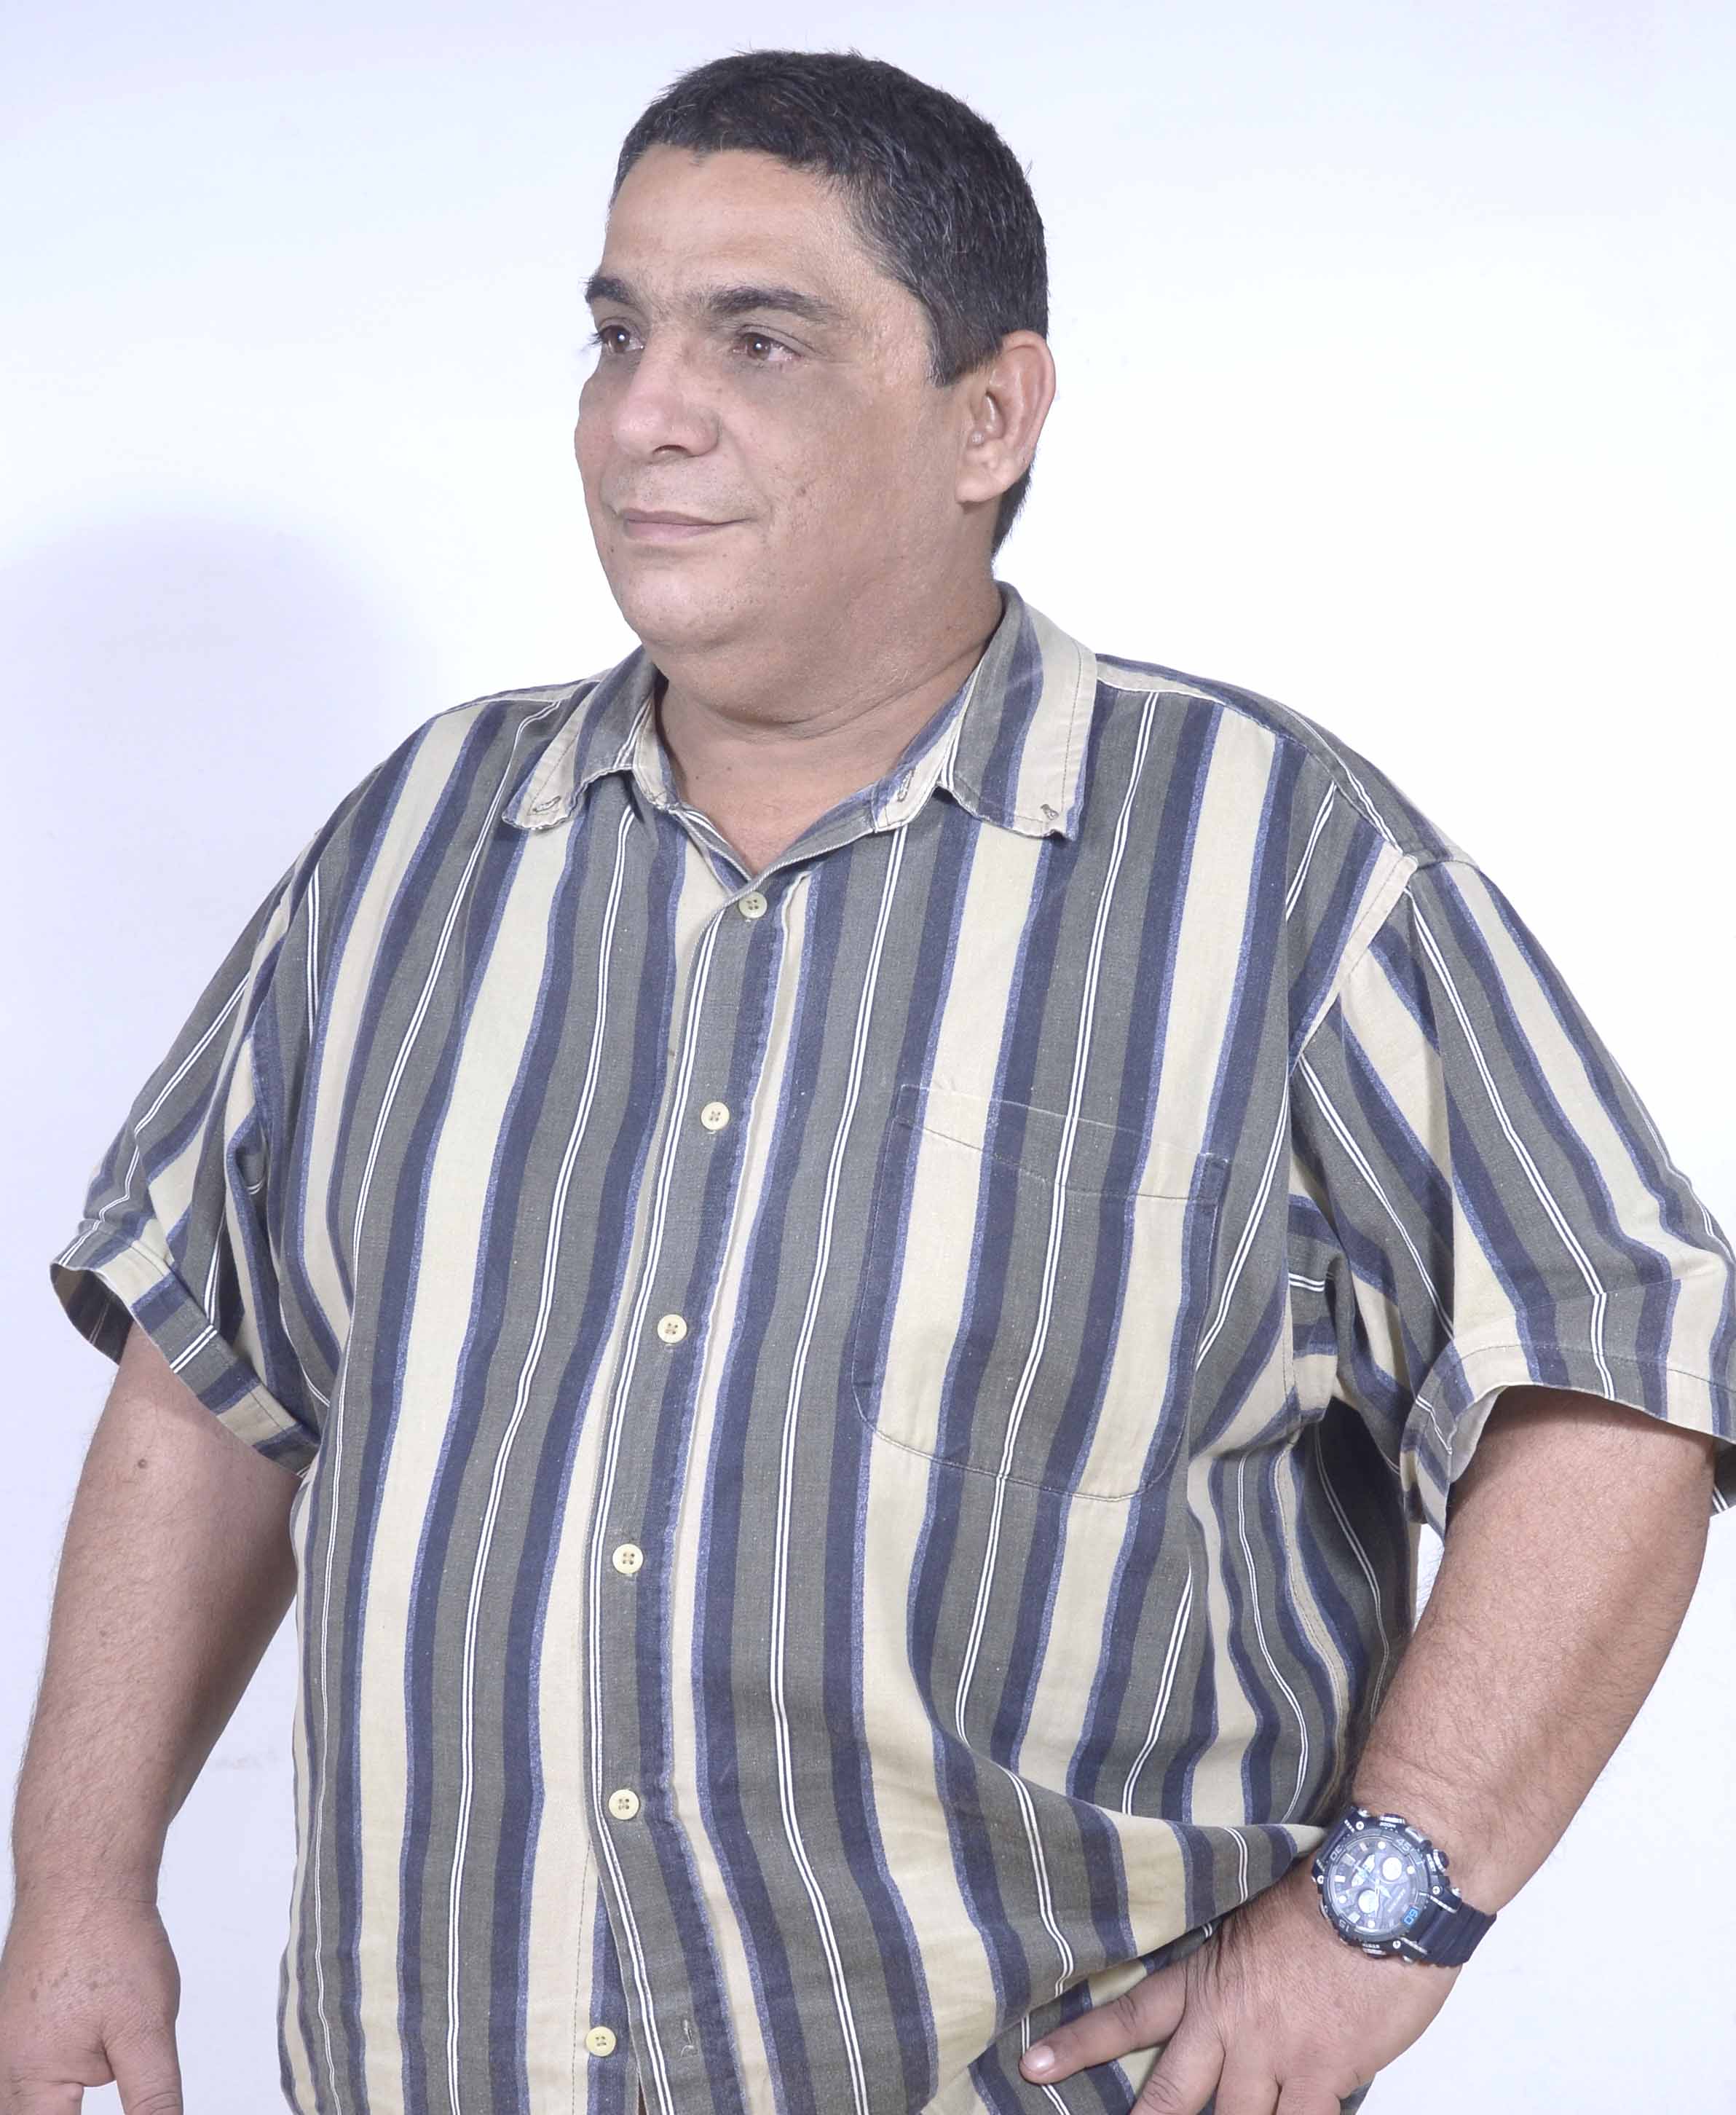 José Luis Riverón Rodríguez